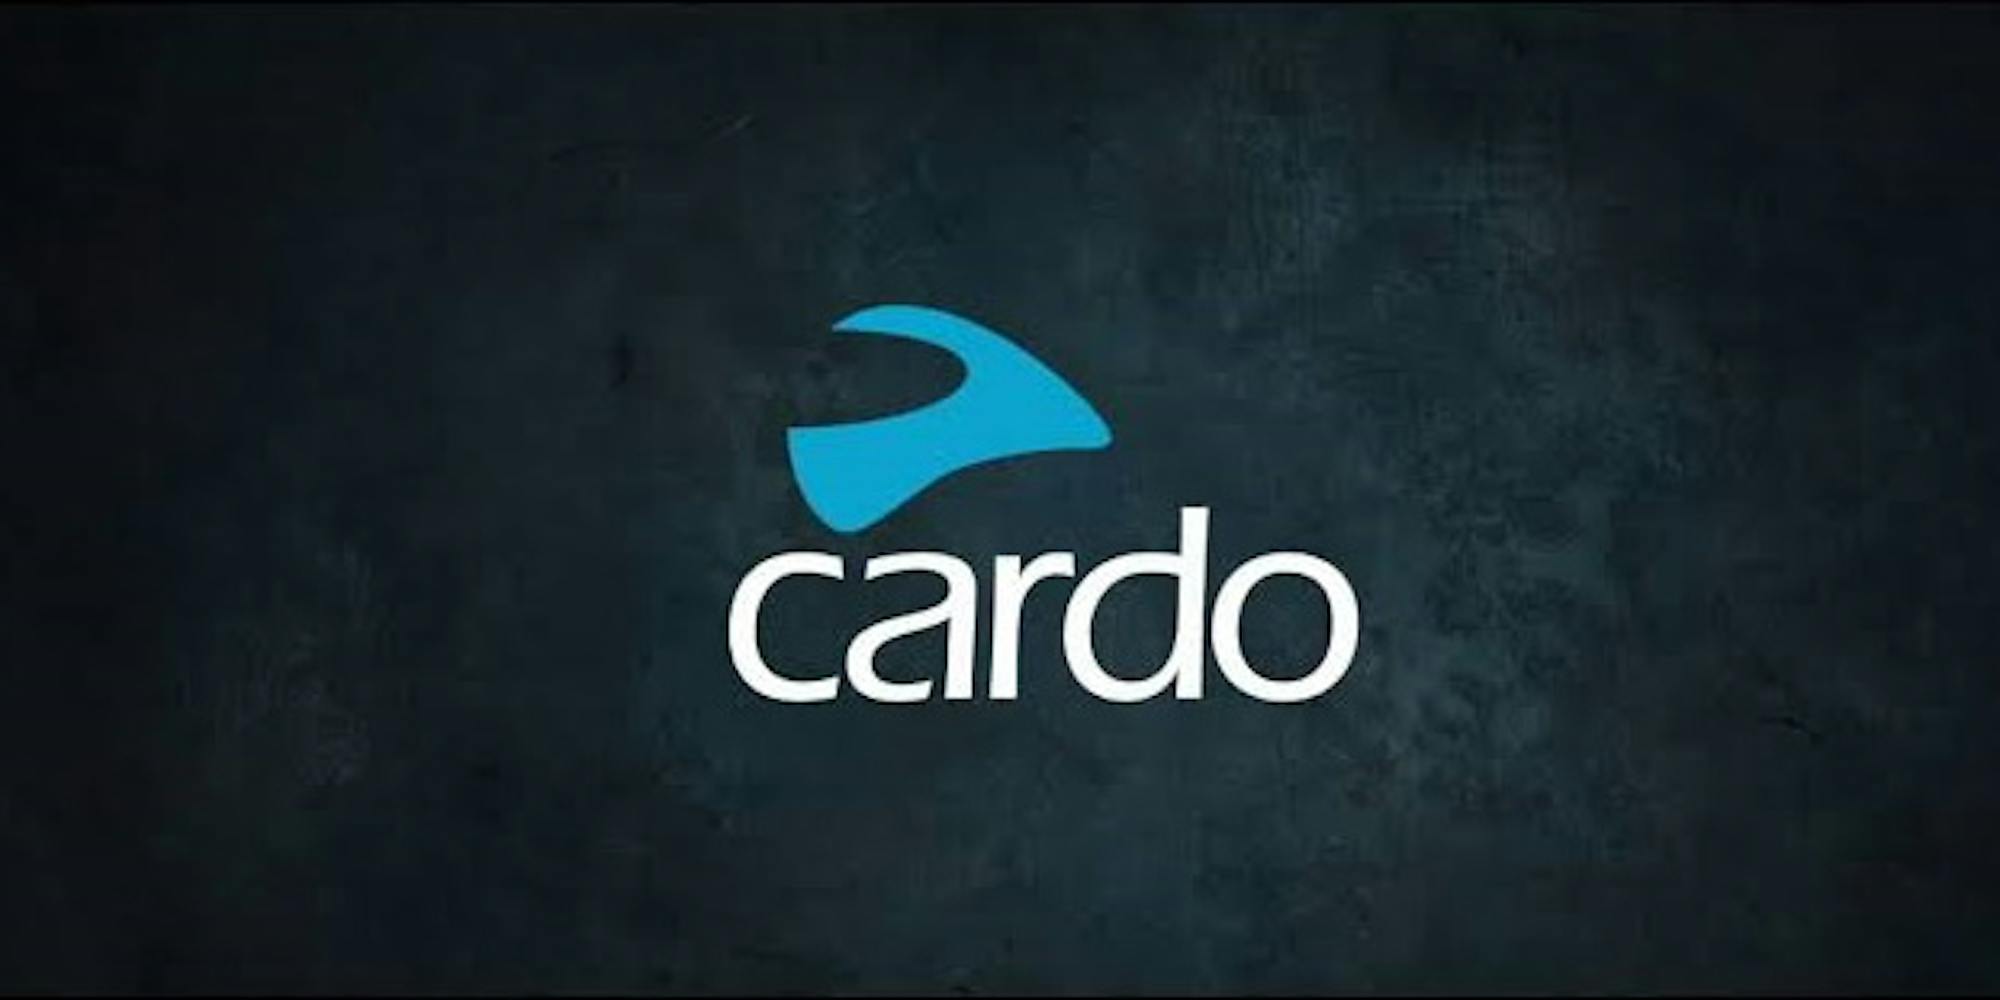 White and blue Cardo logo on dark background